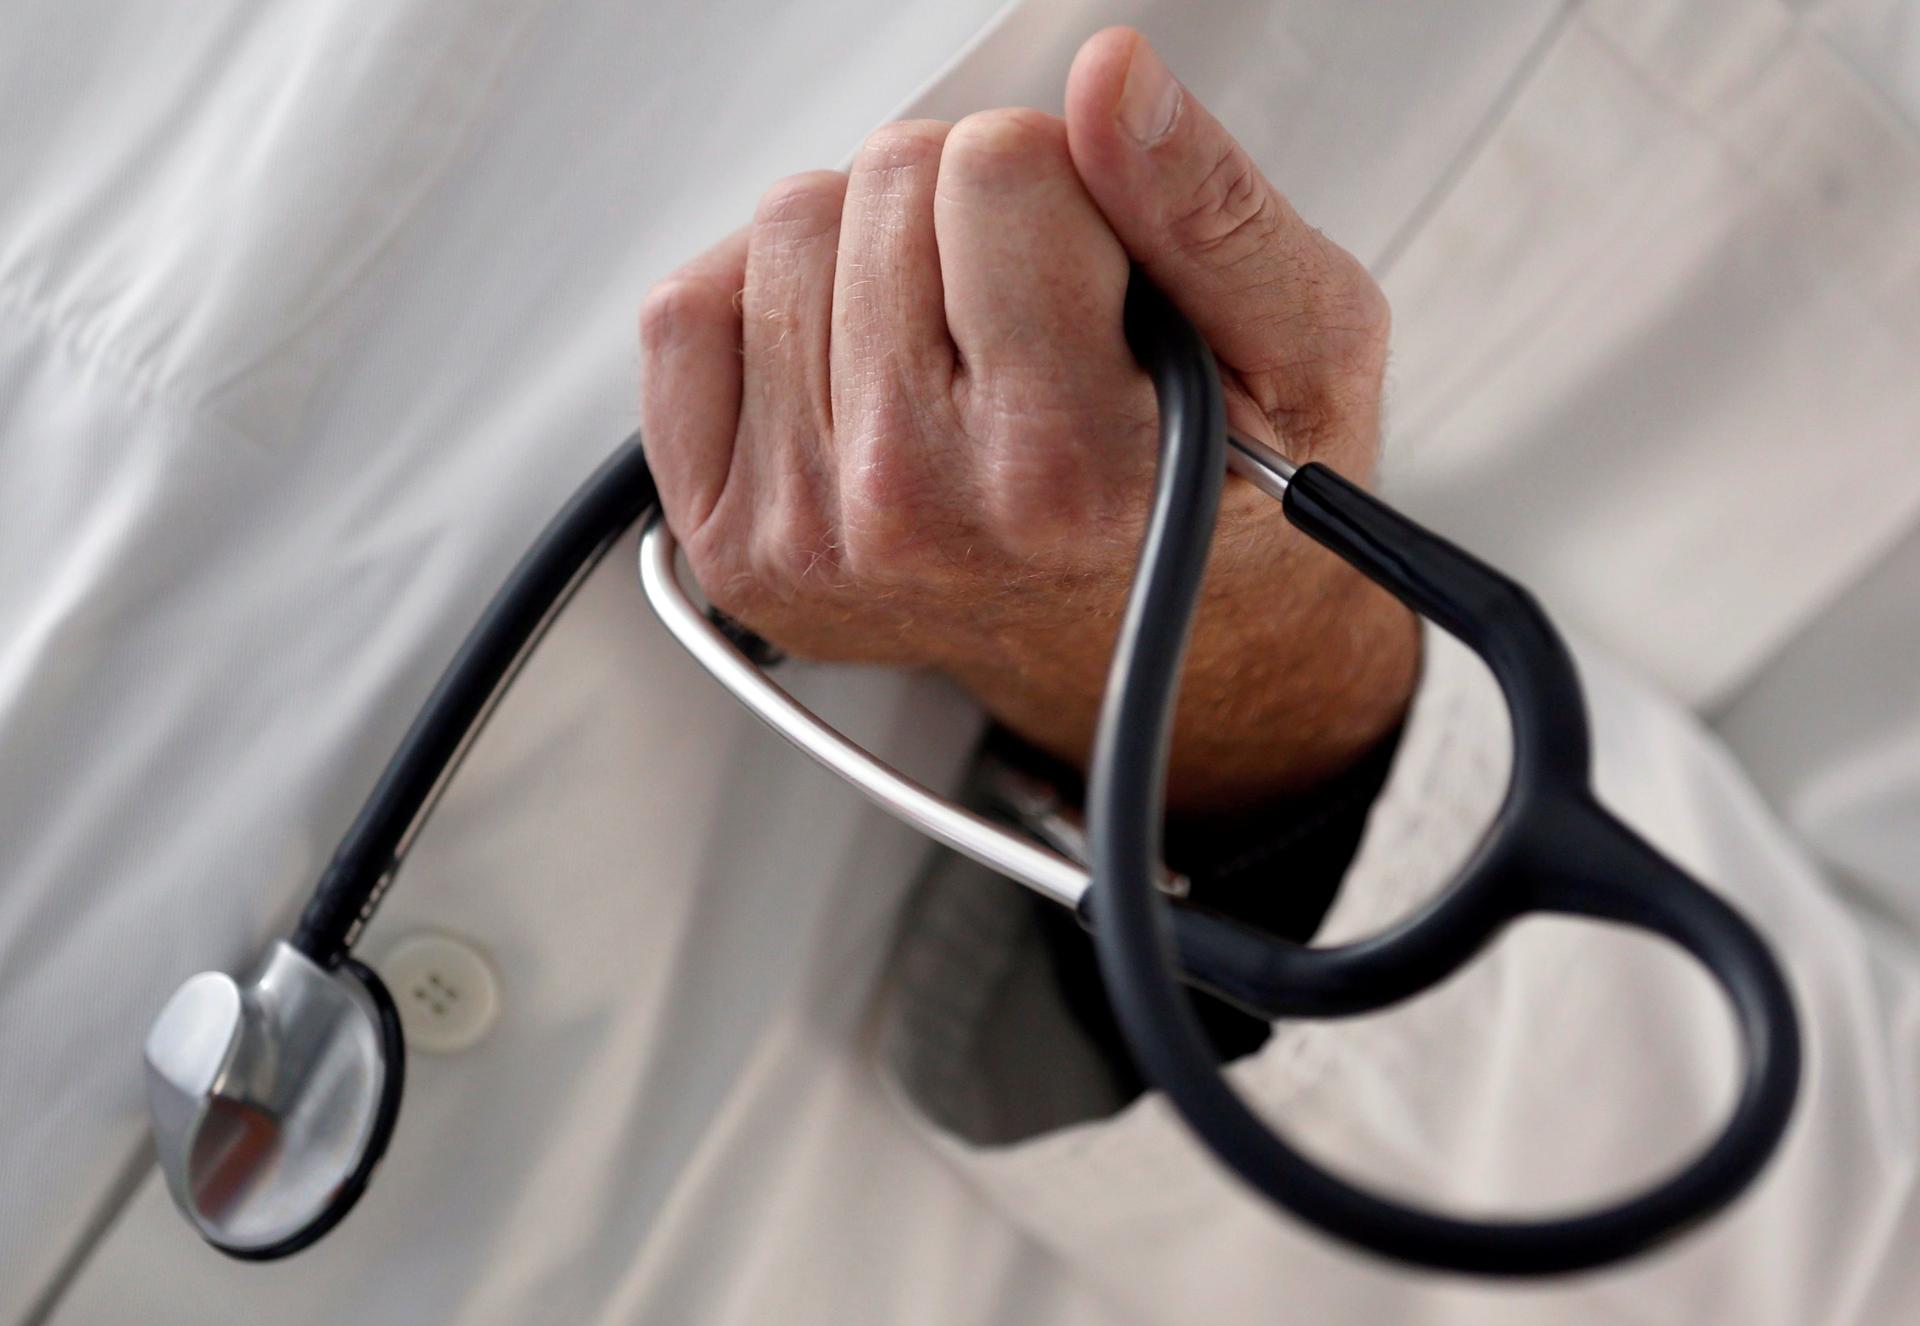 Florida lawsuit claims Biden administration regulations ‘fundamentally redefine the practice of medicine’